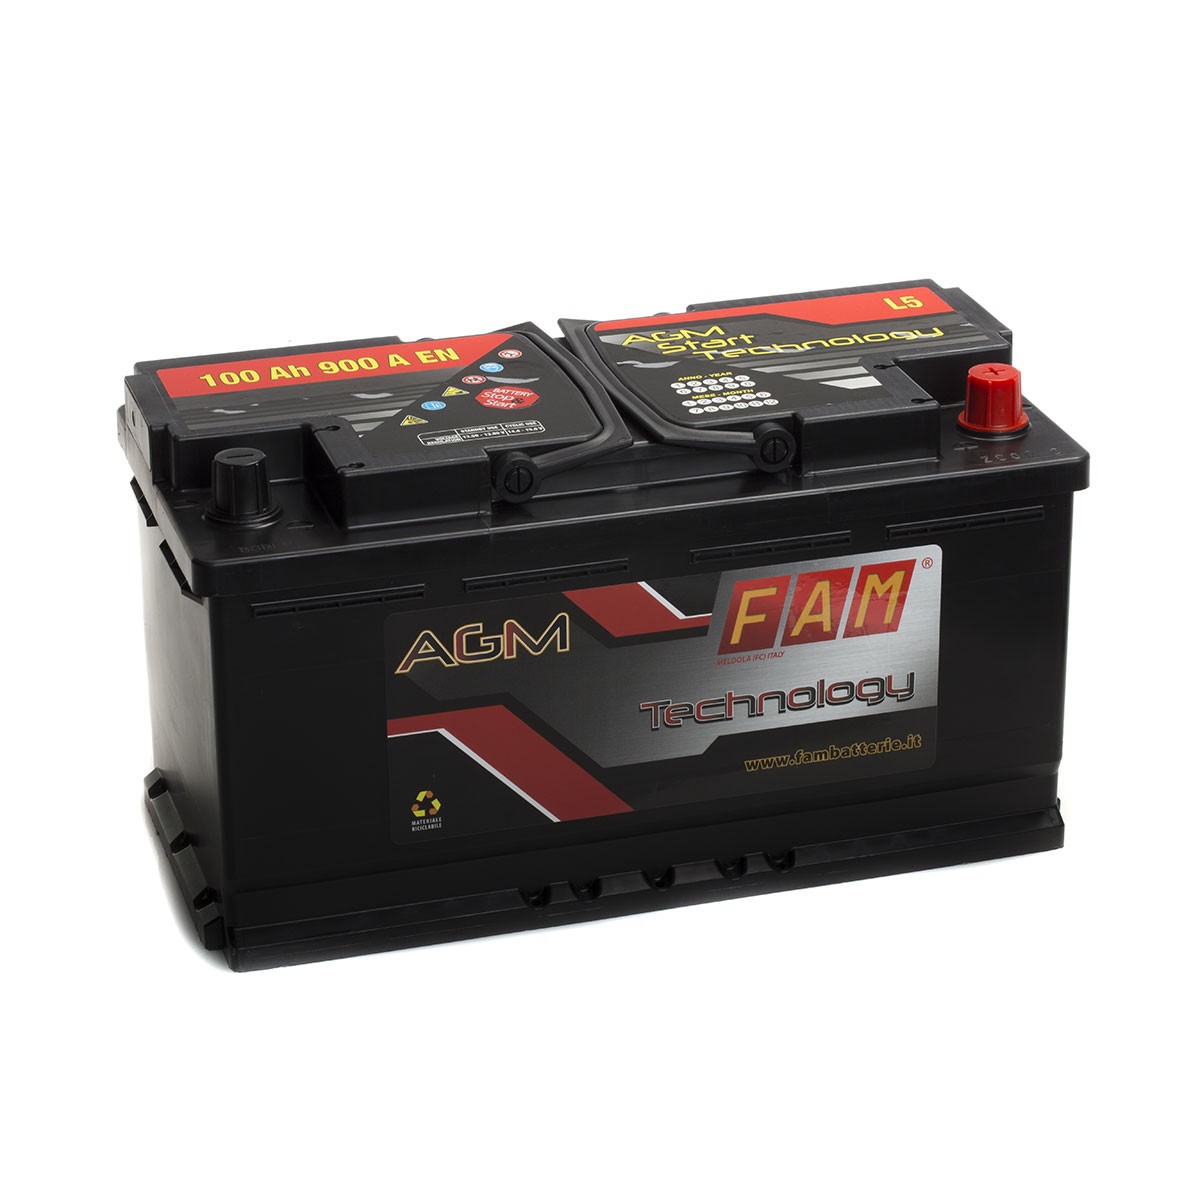 Batterie Auto Start & Stop AGM: L5 AGM START 100 - FAM Batterie